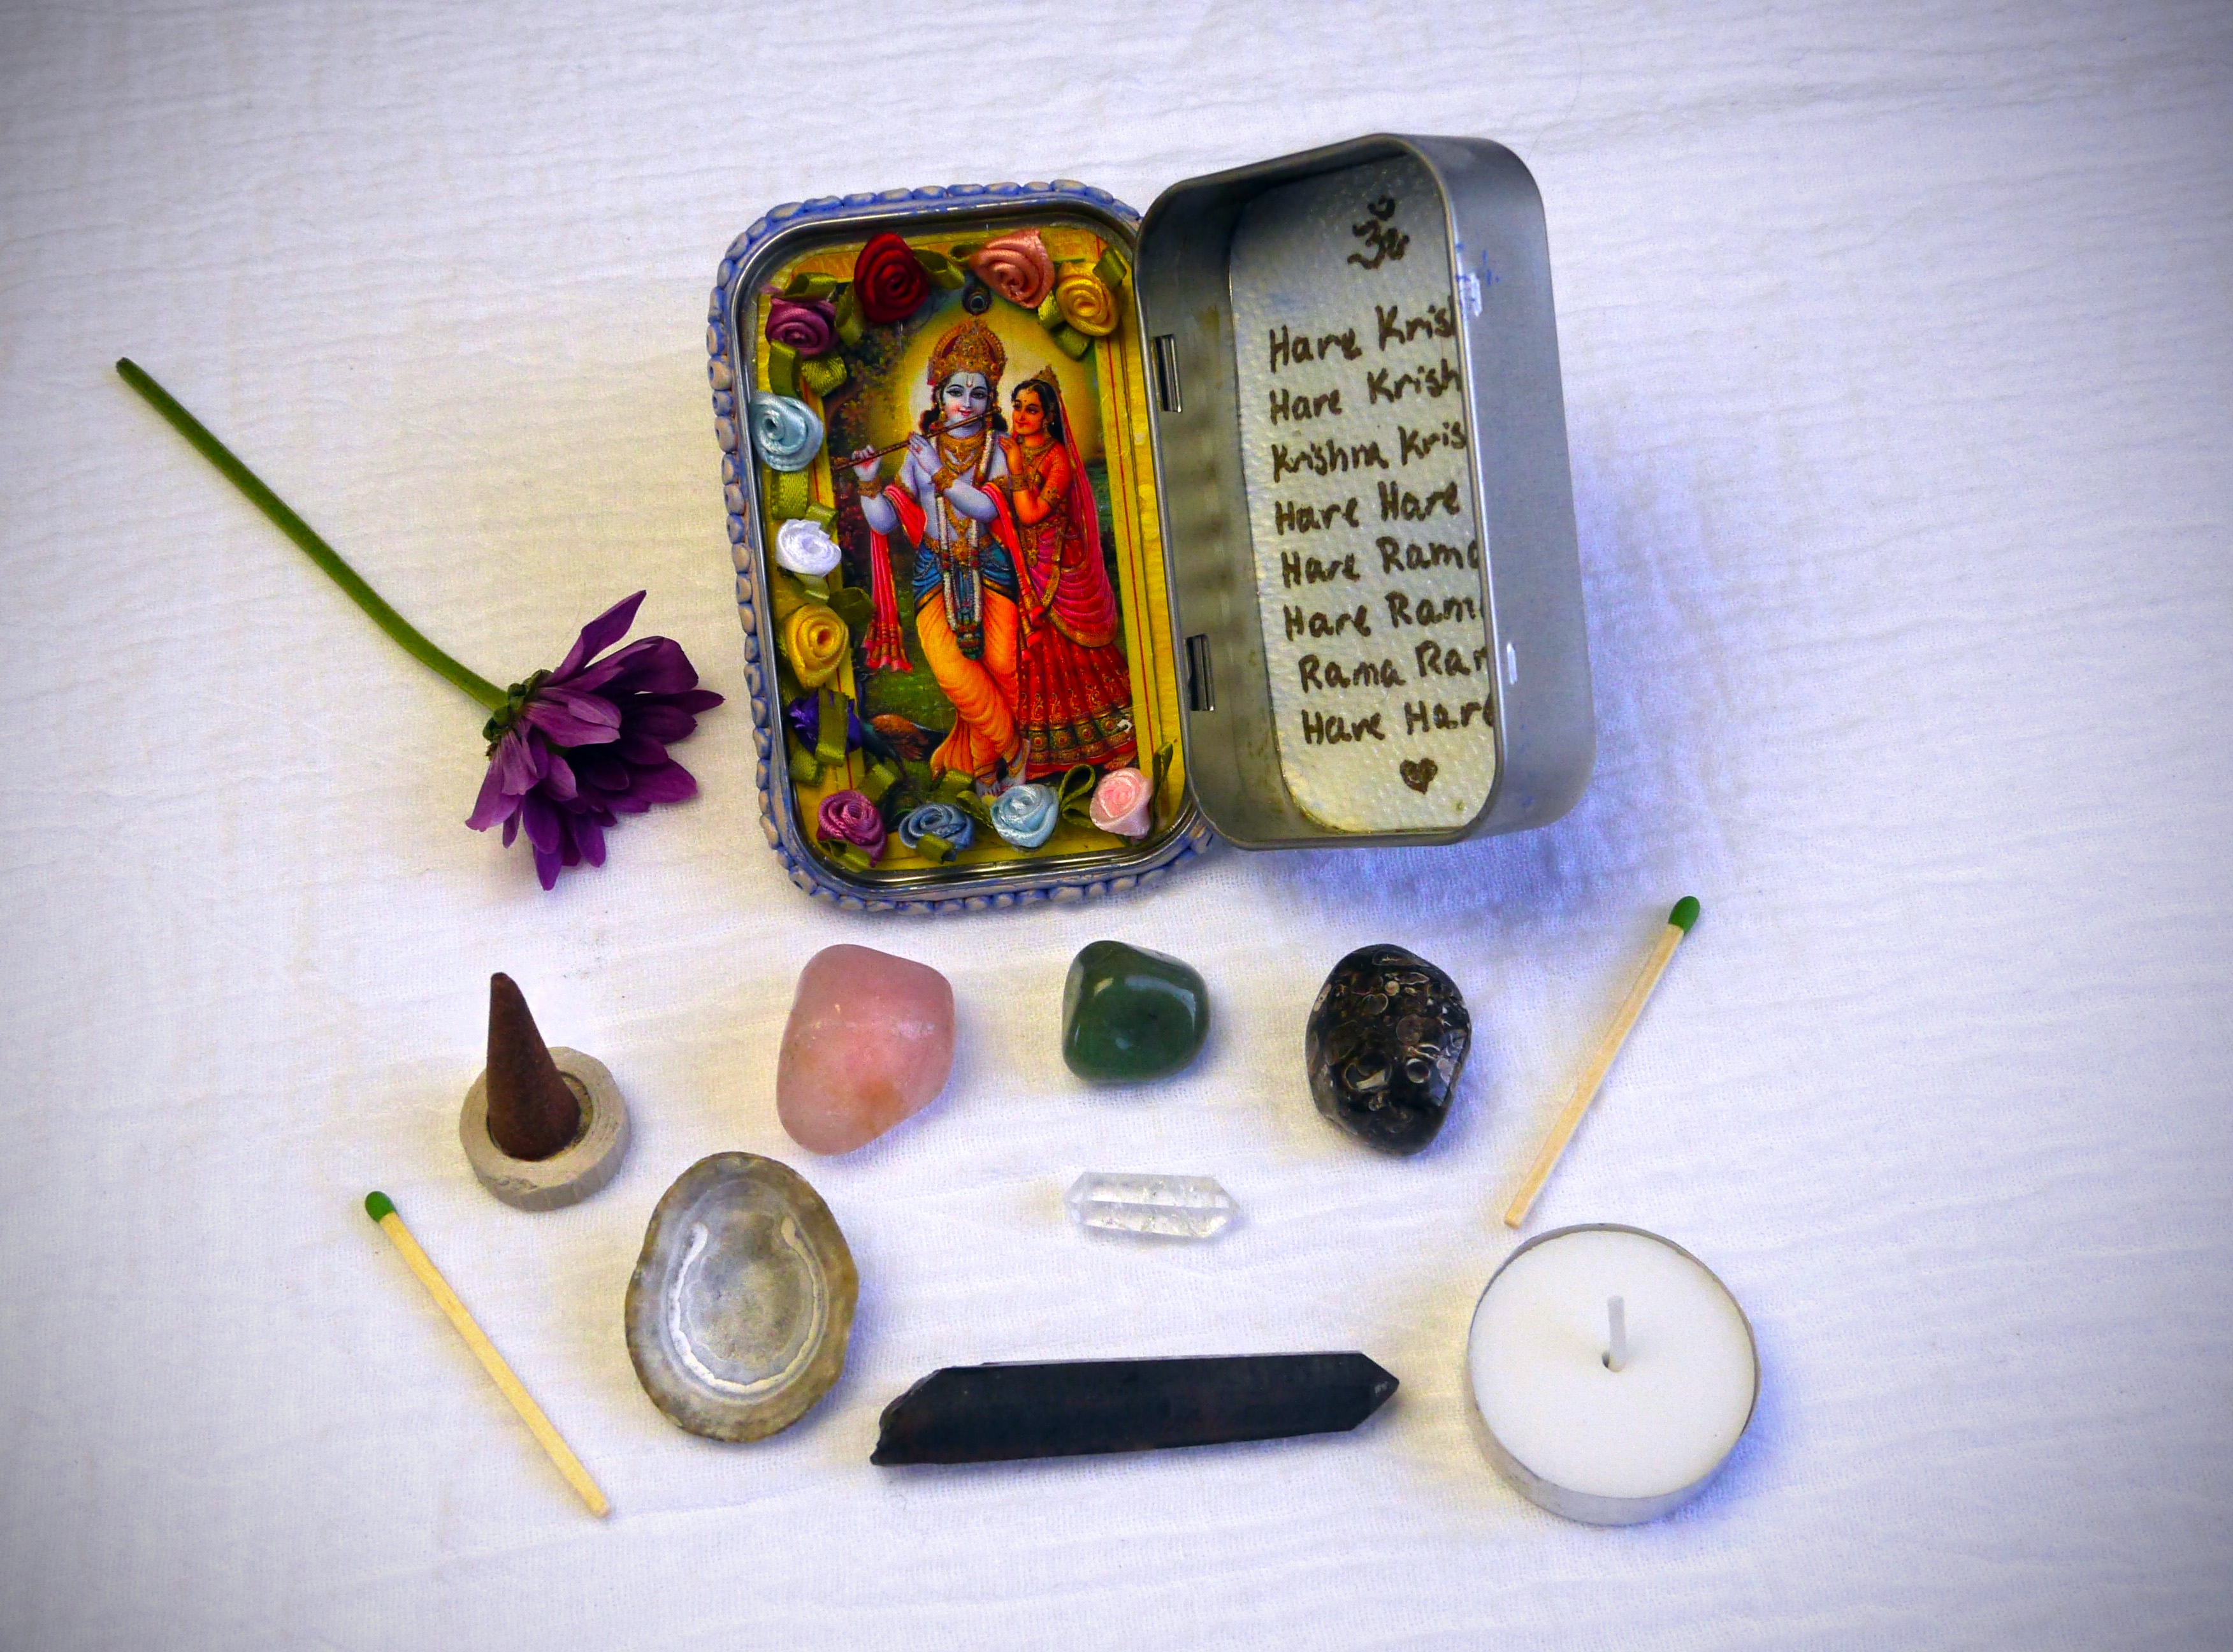 Travel altar with Sri Sri Radha Krishna, mantra, crystals, incense, a tea light candle, and a tiny wand.